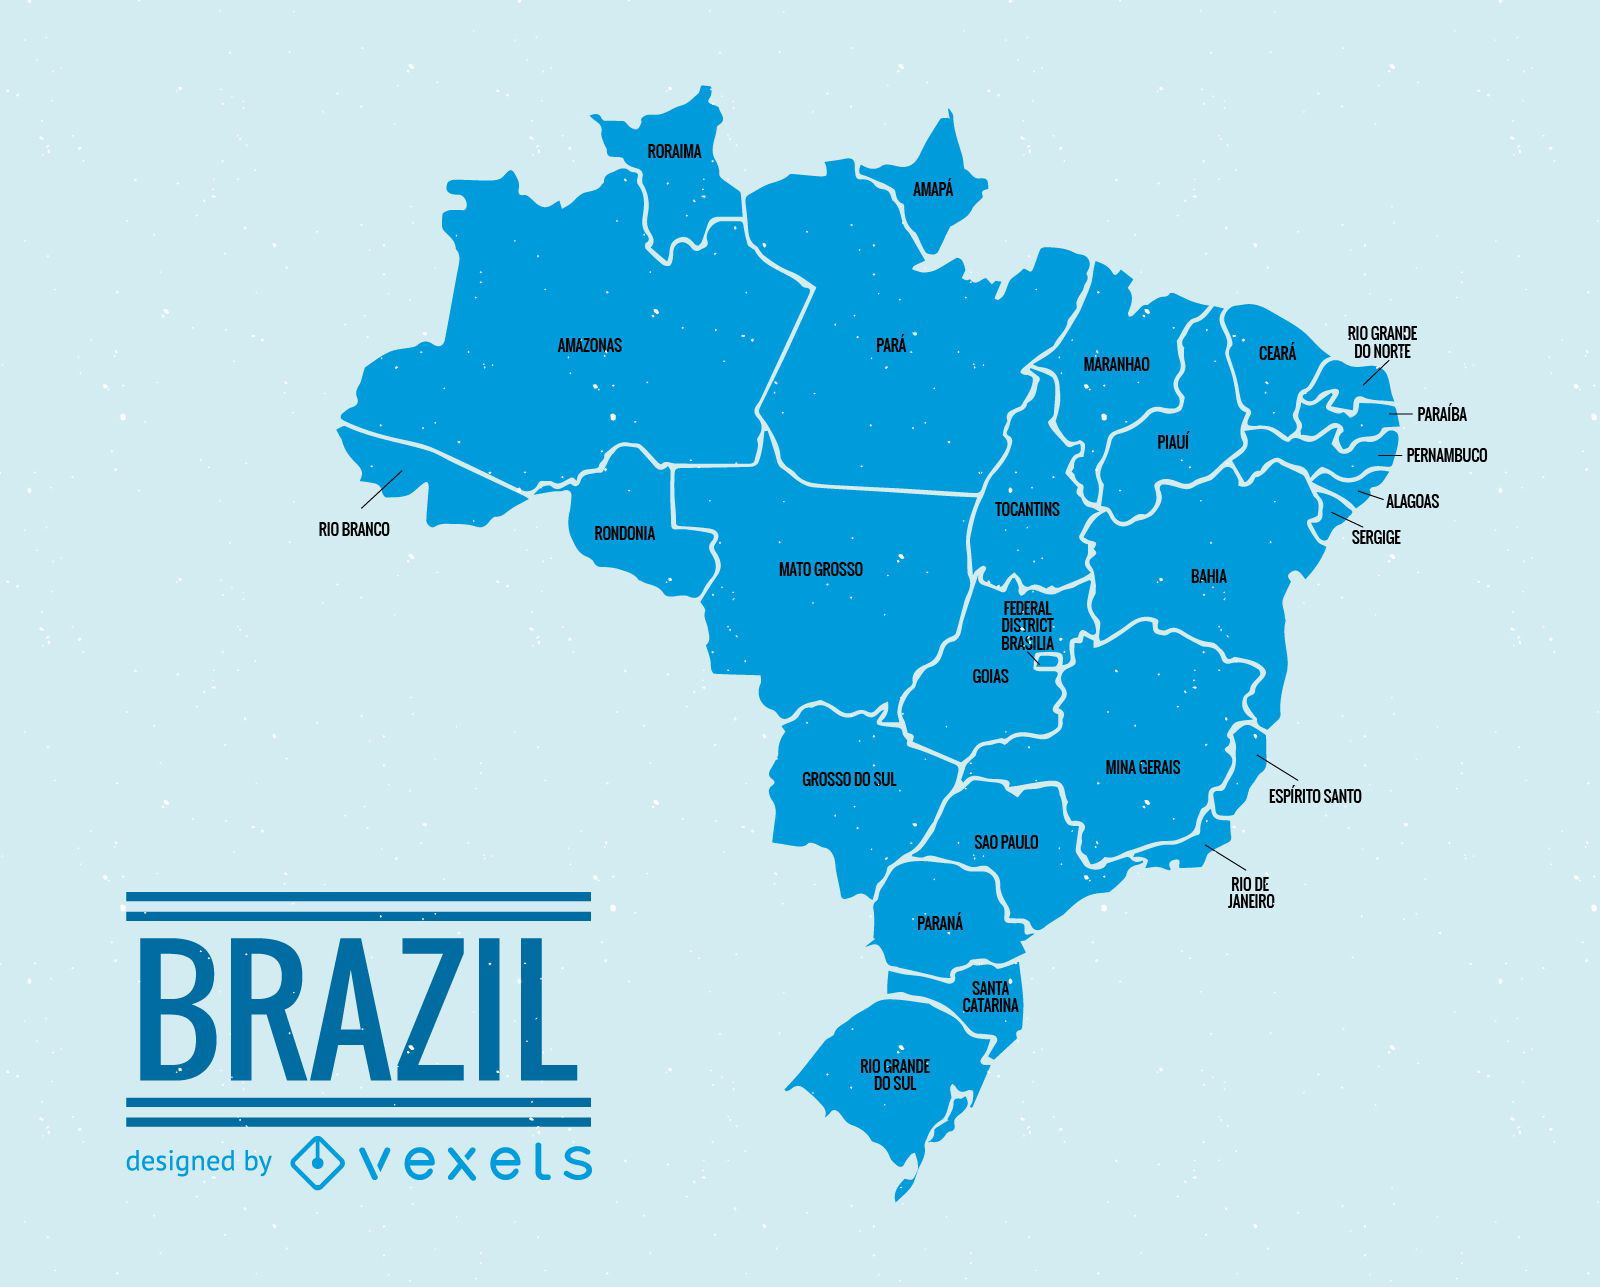 Mapa de la divisi?n administrativa de Brasil